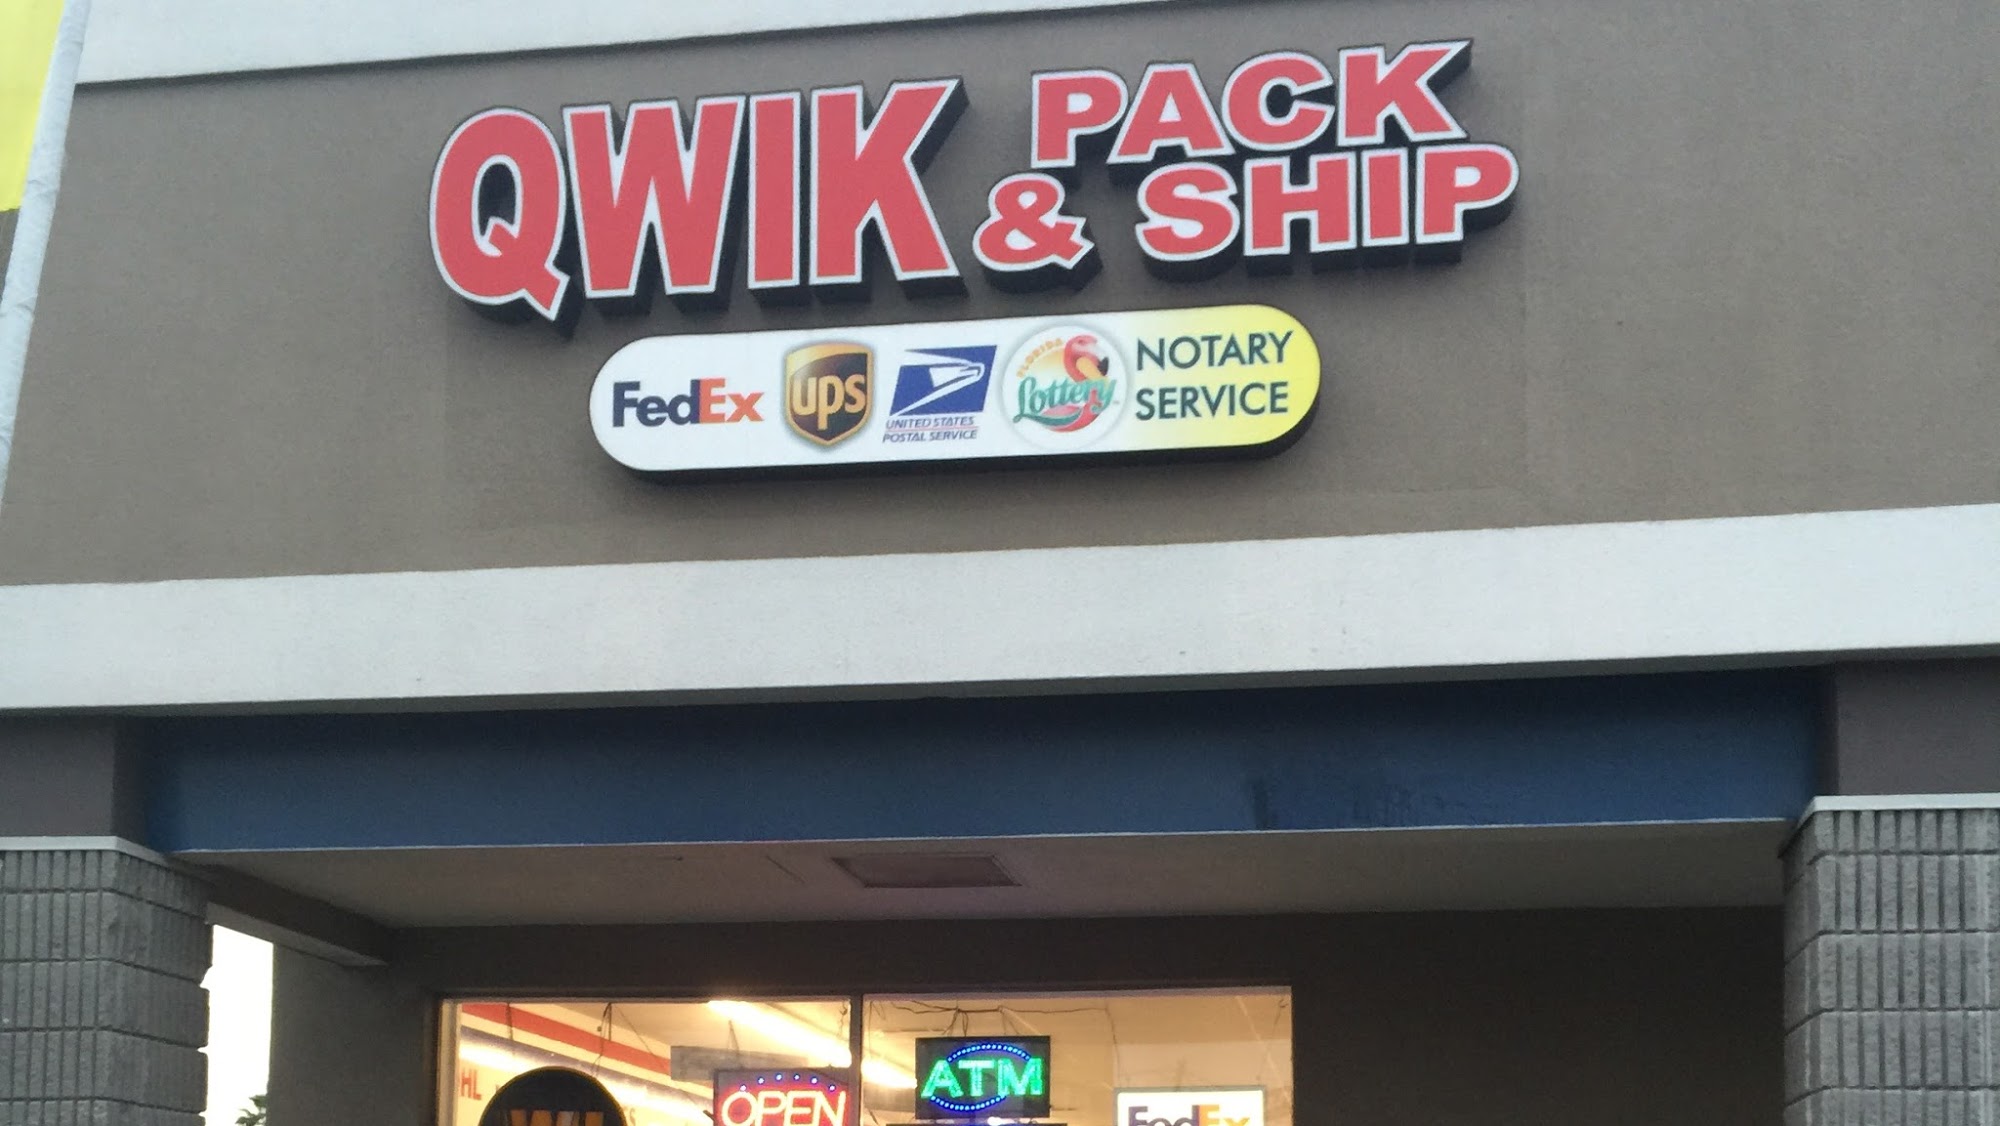 Qwik Pack & Ship